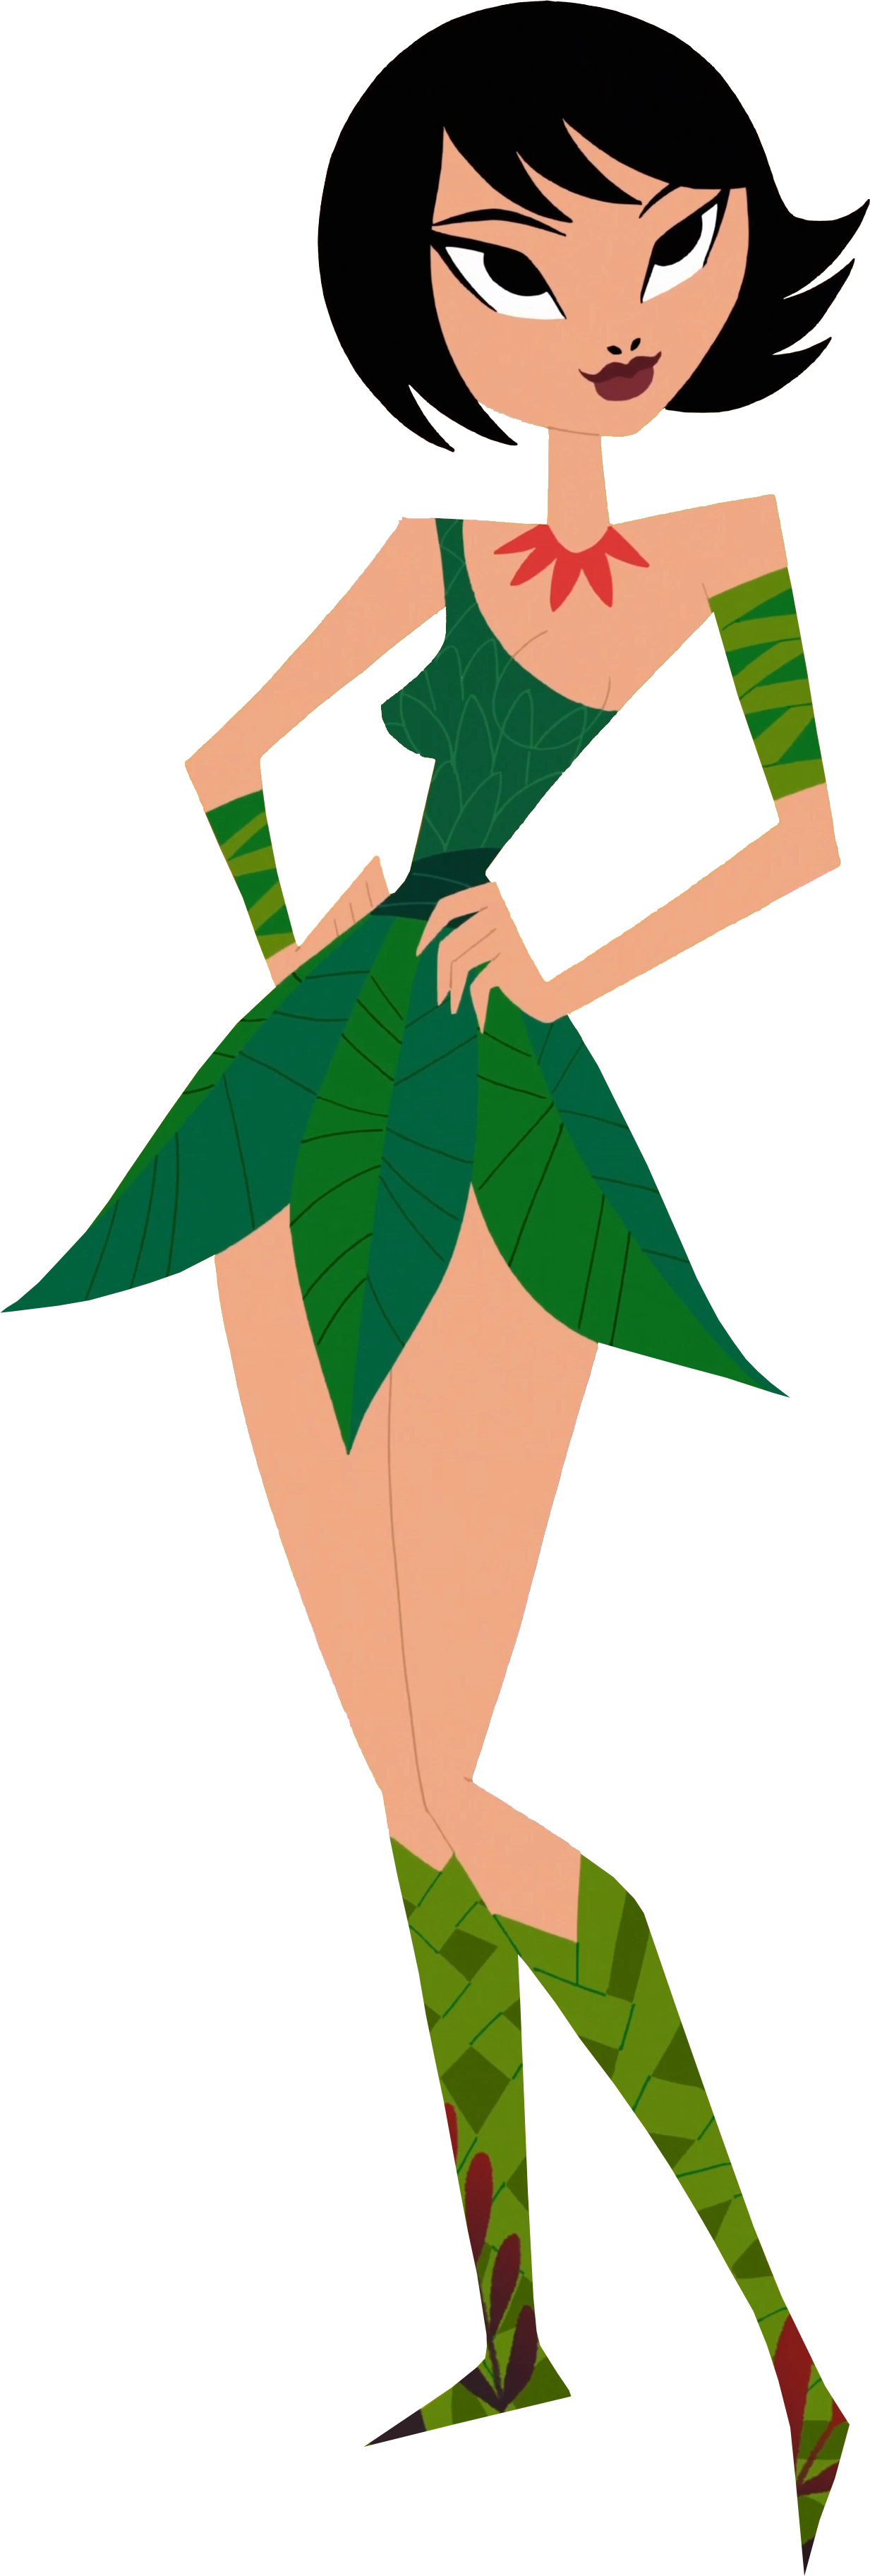 Cartoon Of A Woman In A Green Dress